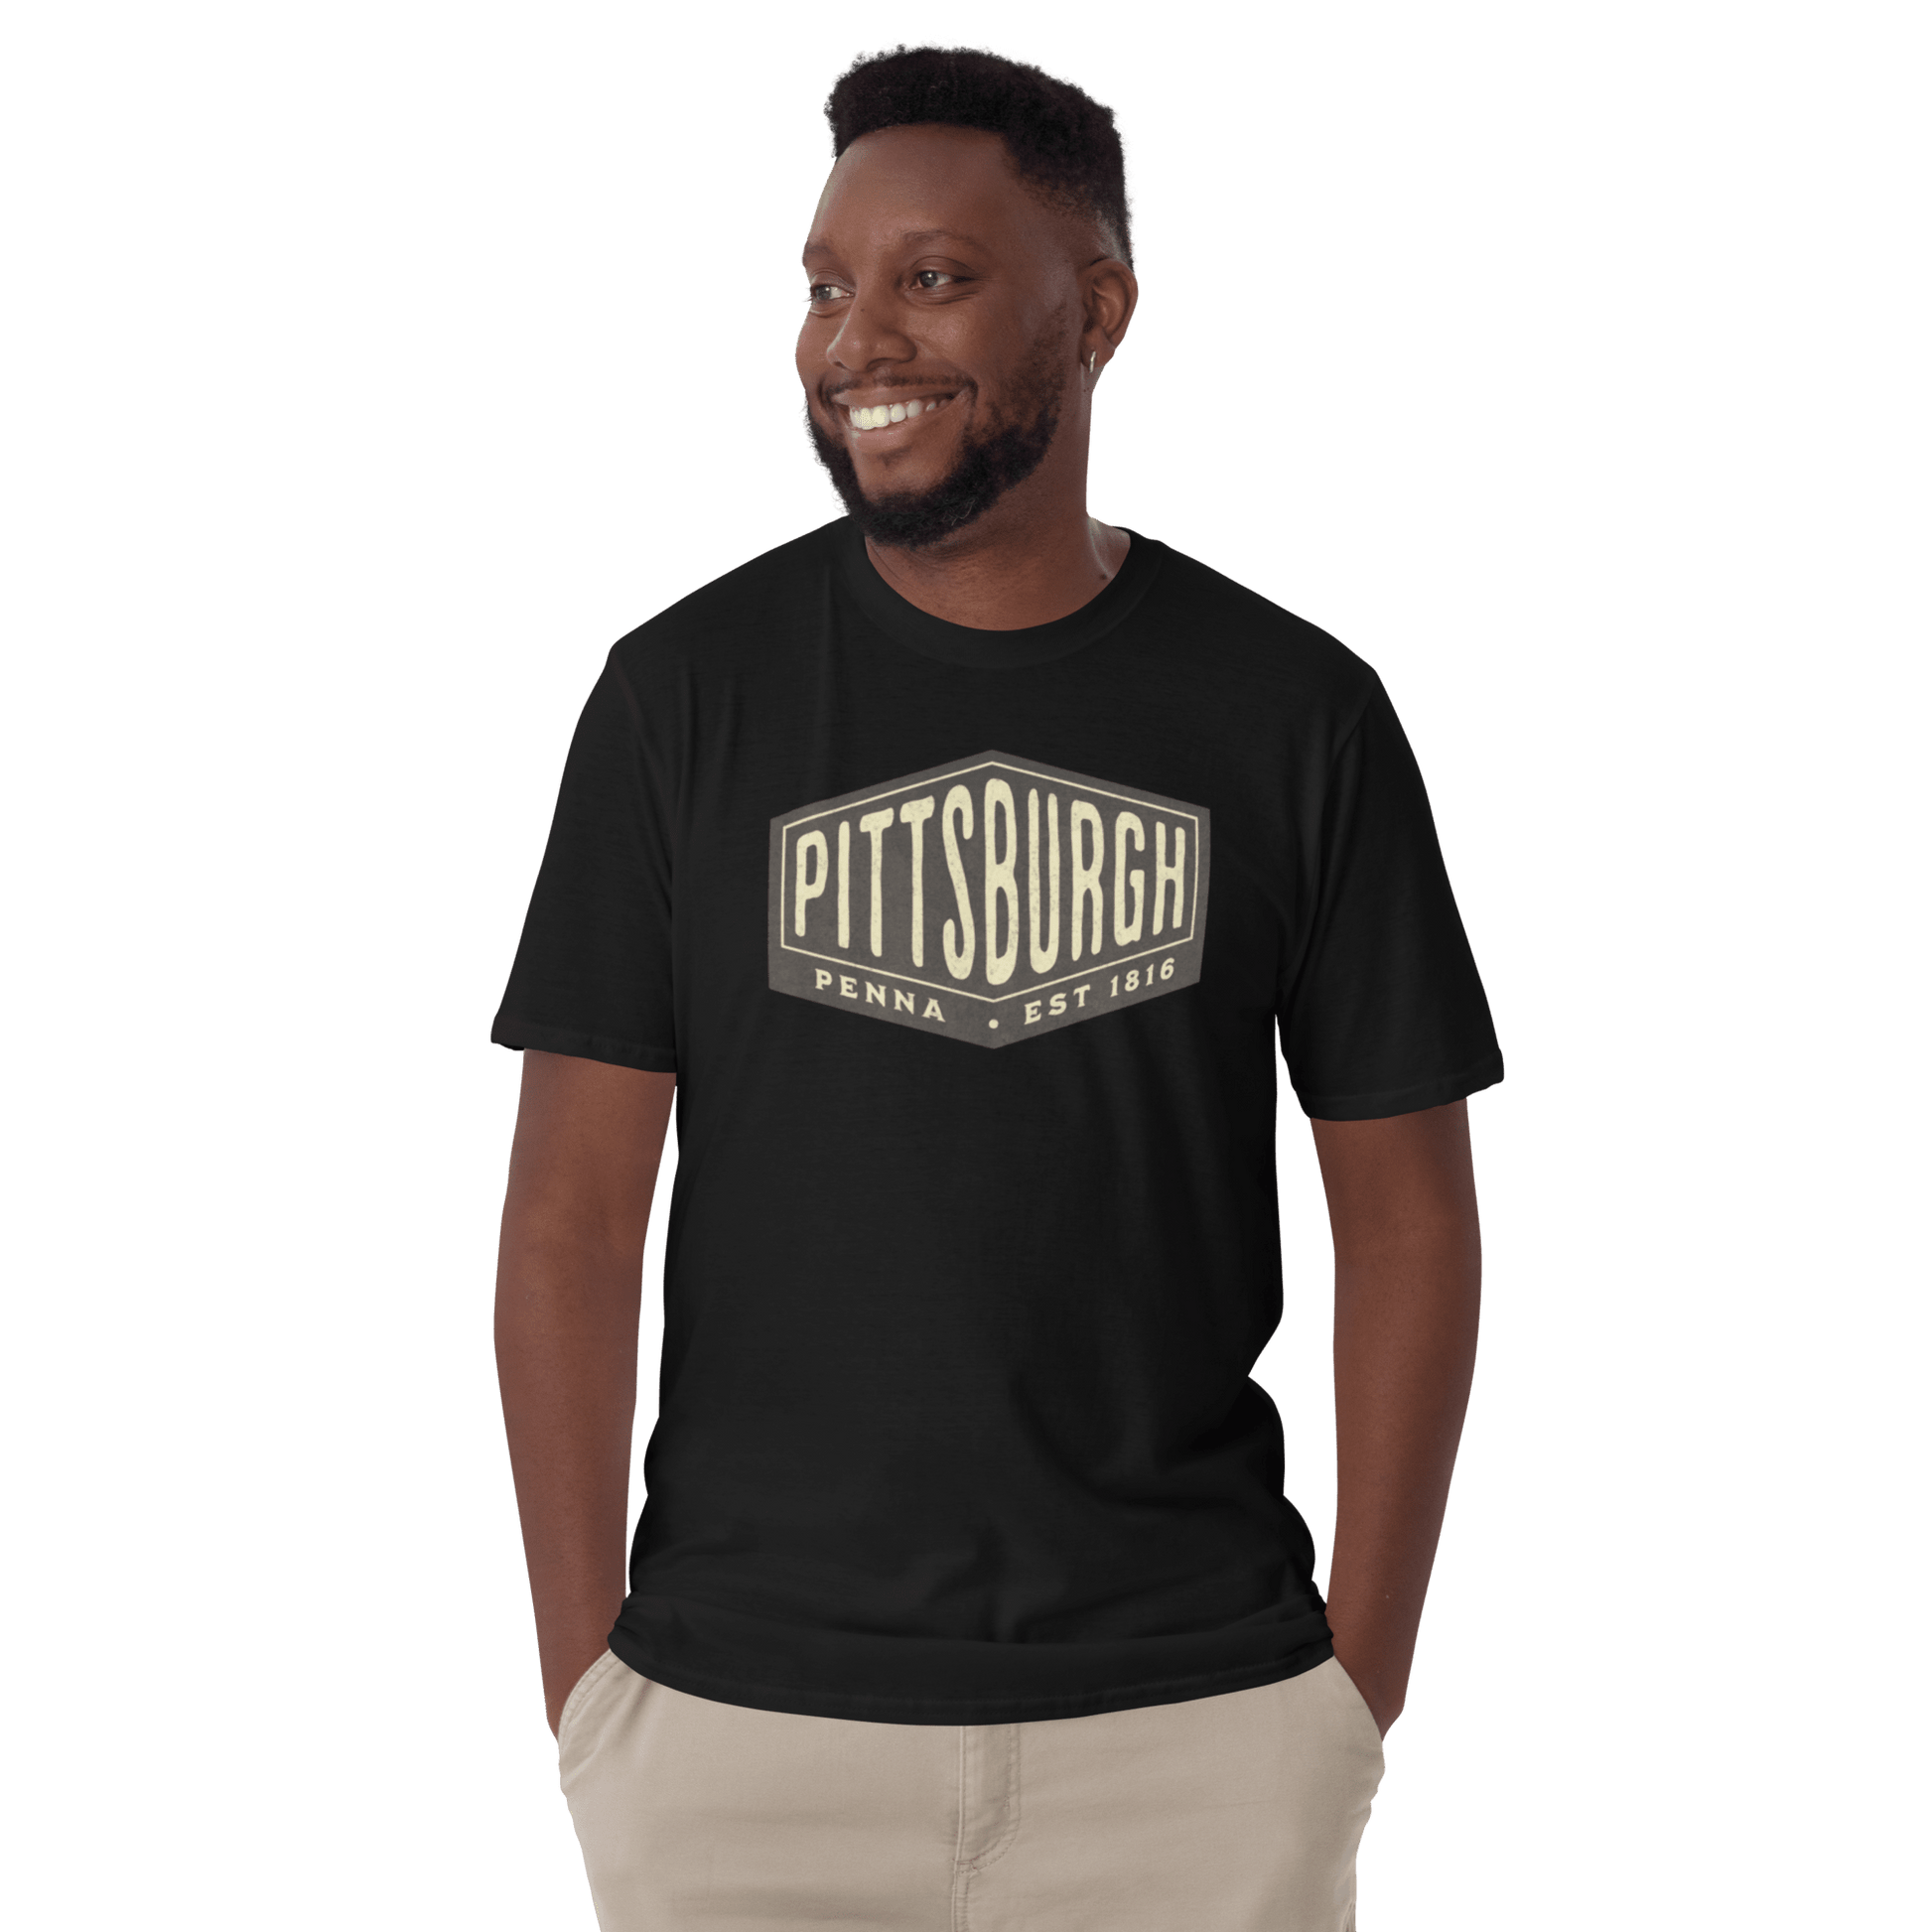 Pittsburgh Penna Est 1816 Vintage Graphic T-Shirt, Steel City Tee, Yinzer Shirt Yinzergear 